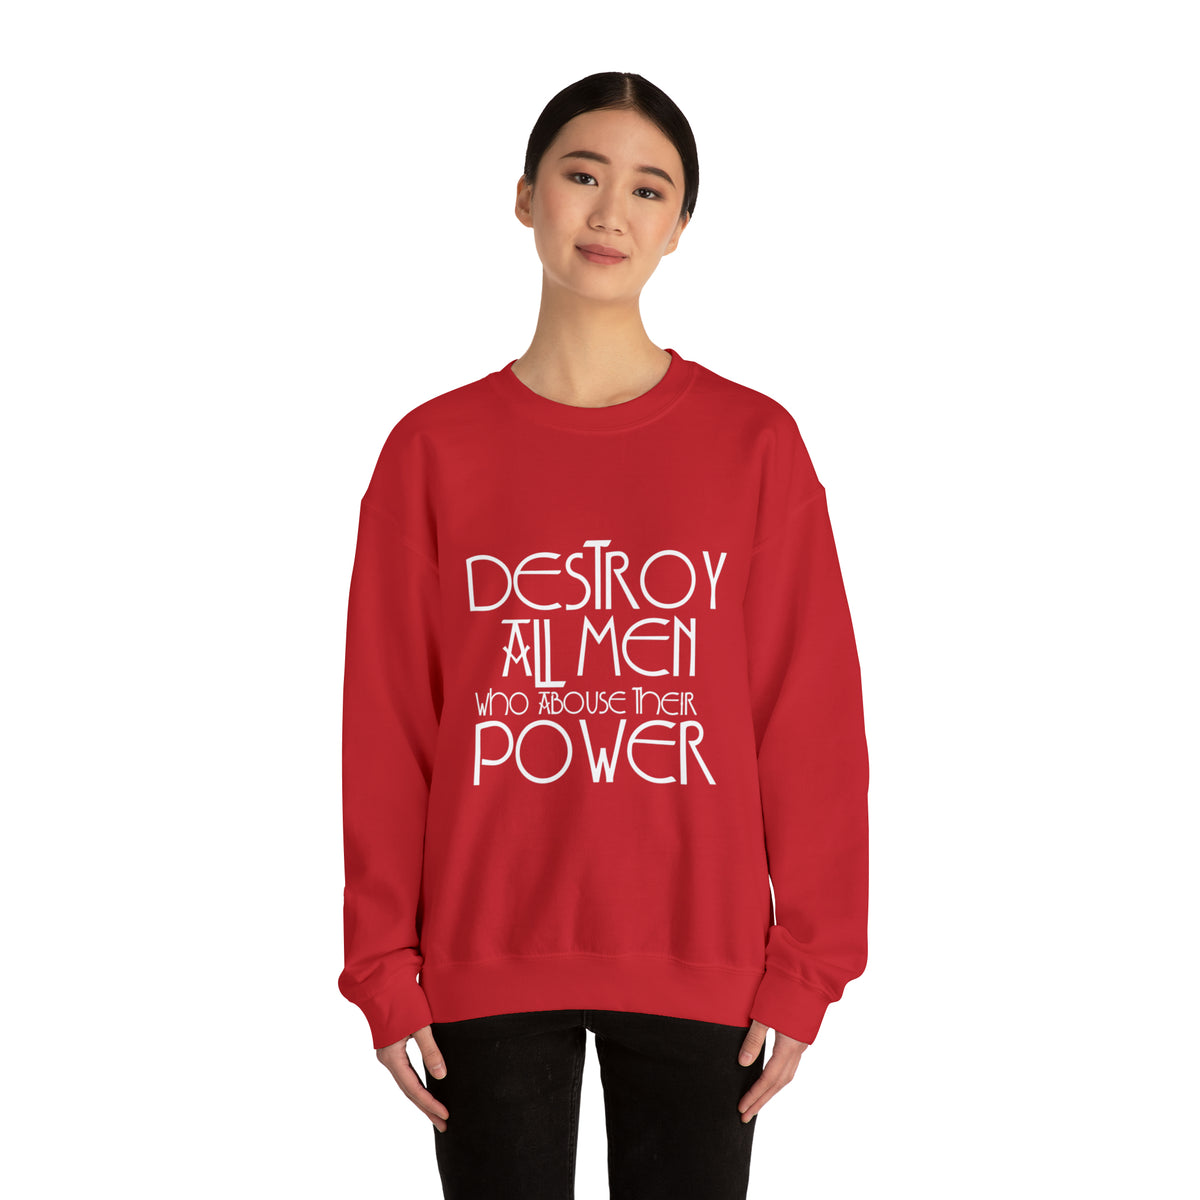 Destroy All Men Unisex Sweatshirt